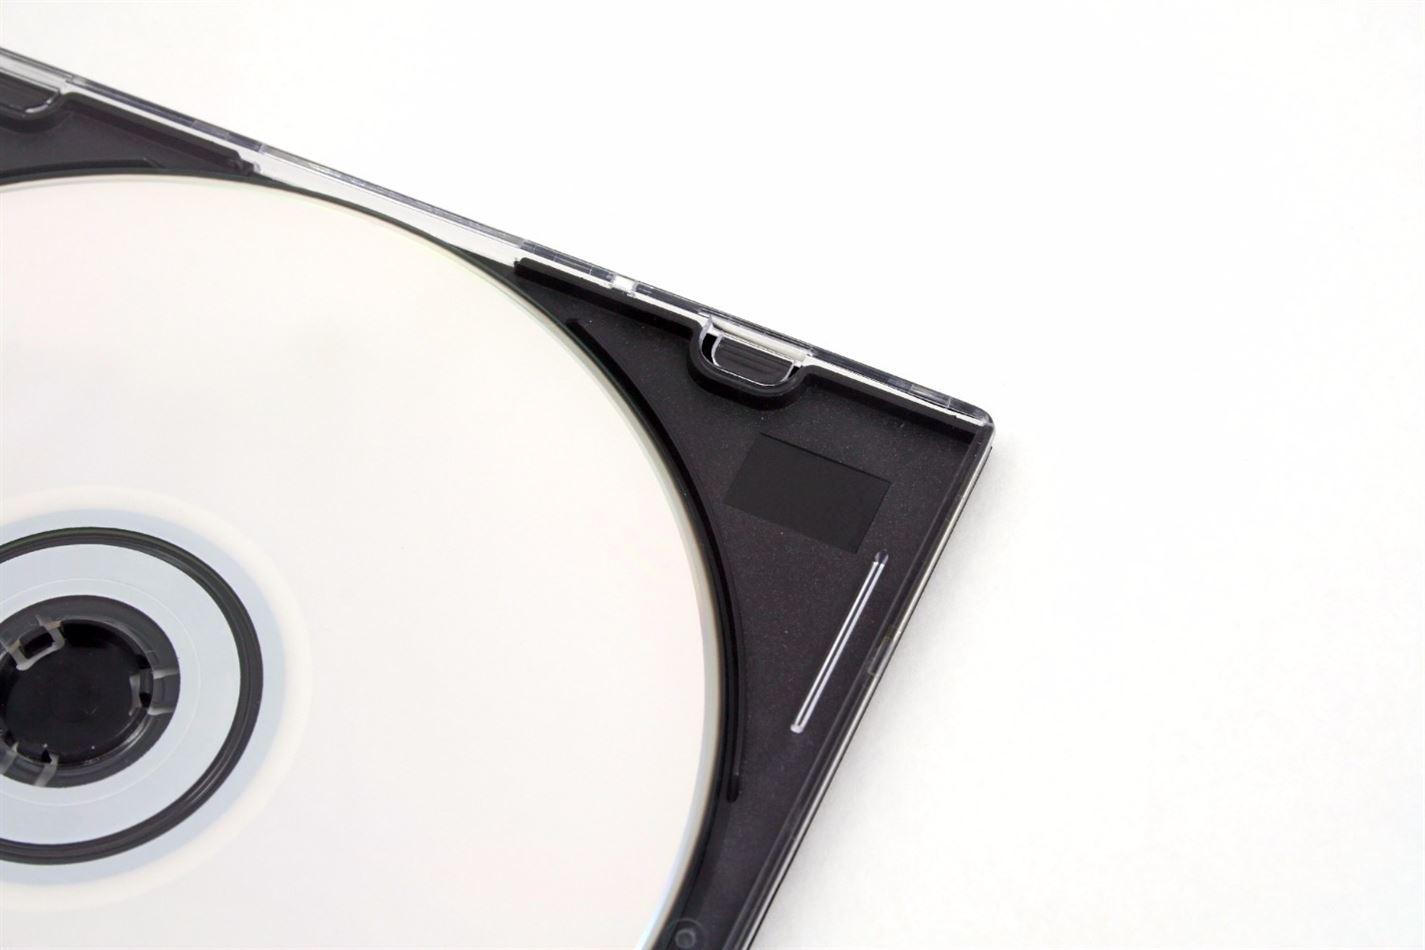 Toshiba HD-DVD HD-A2 Firmware Version 1.2 USA - Physical CD  - NEW - UK SELLER